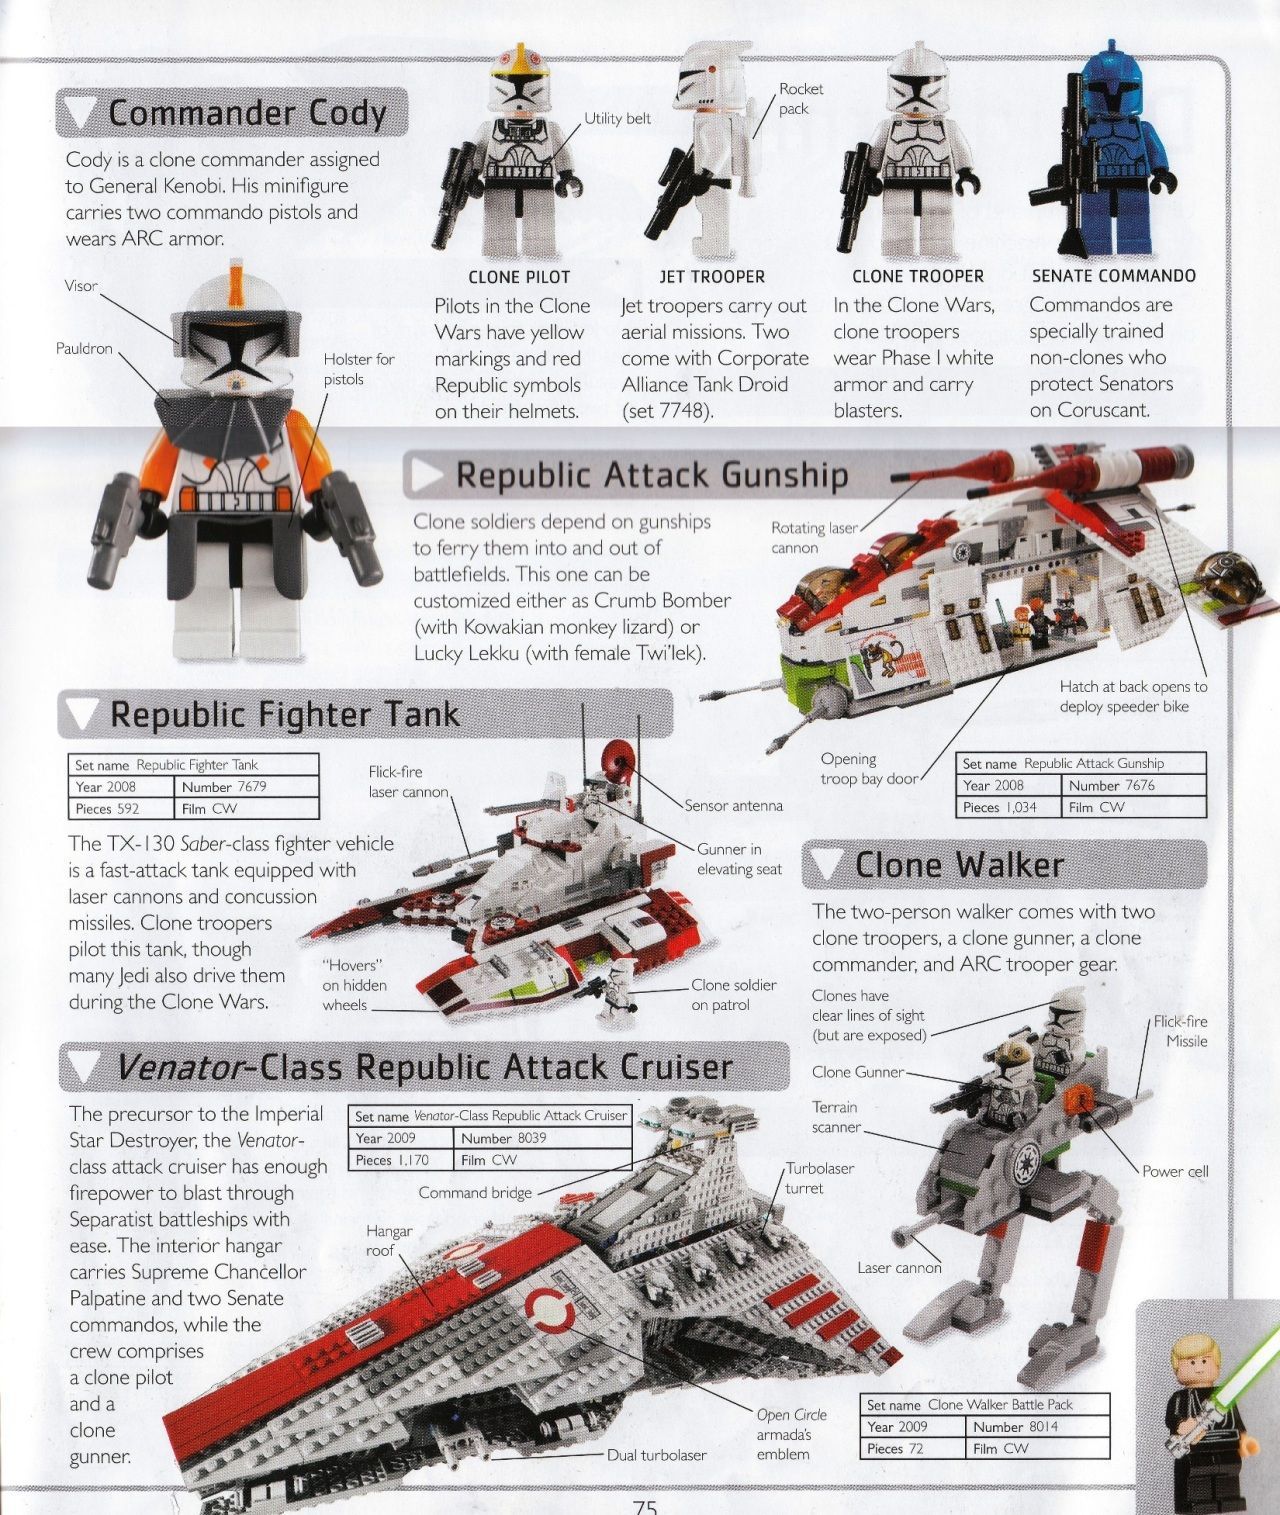 Lego Star Wars The Visual Dictionary 2009 Lego Star Wars The Visual Dictionary 2009 76